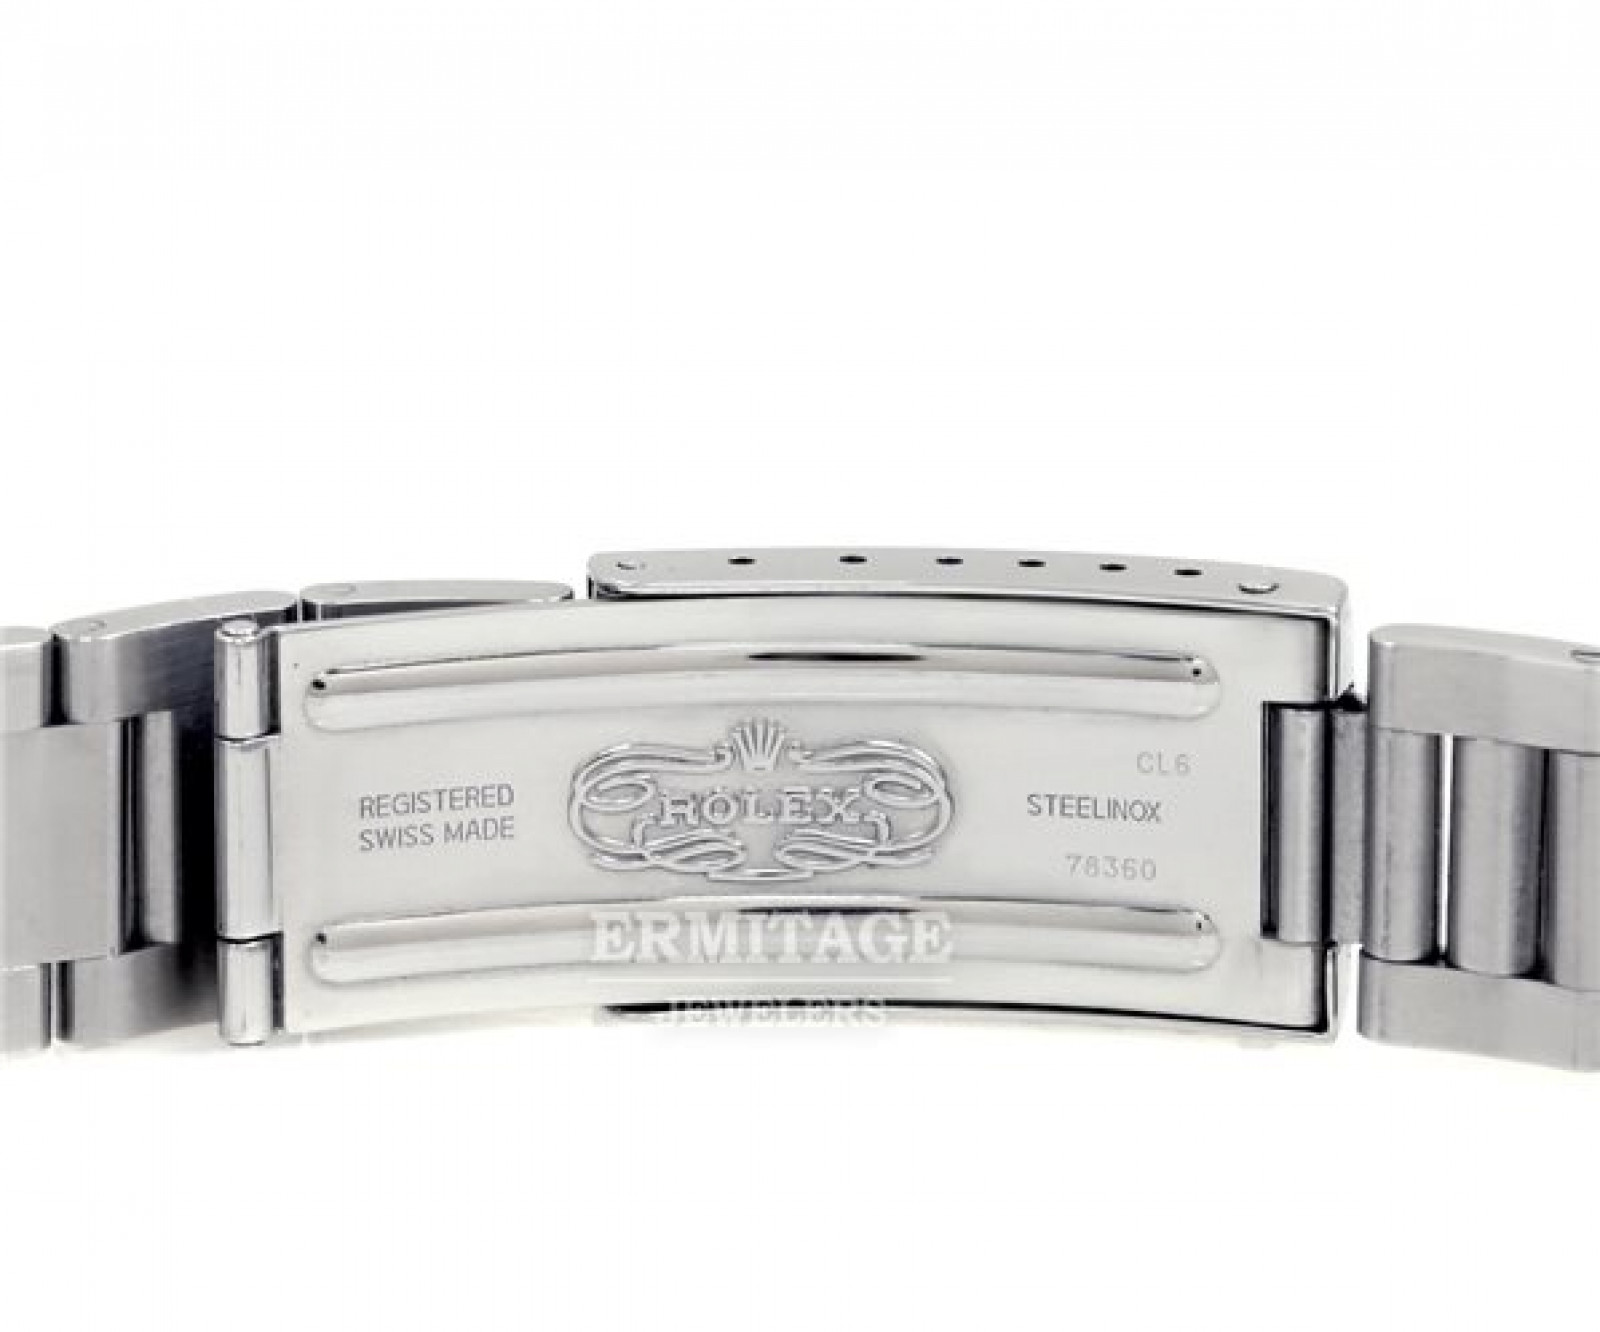 Men's Rolex Datejust 16234 with Oyster Bracelet